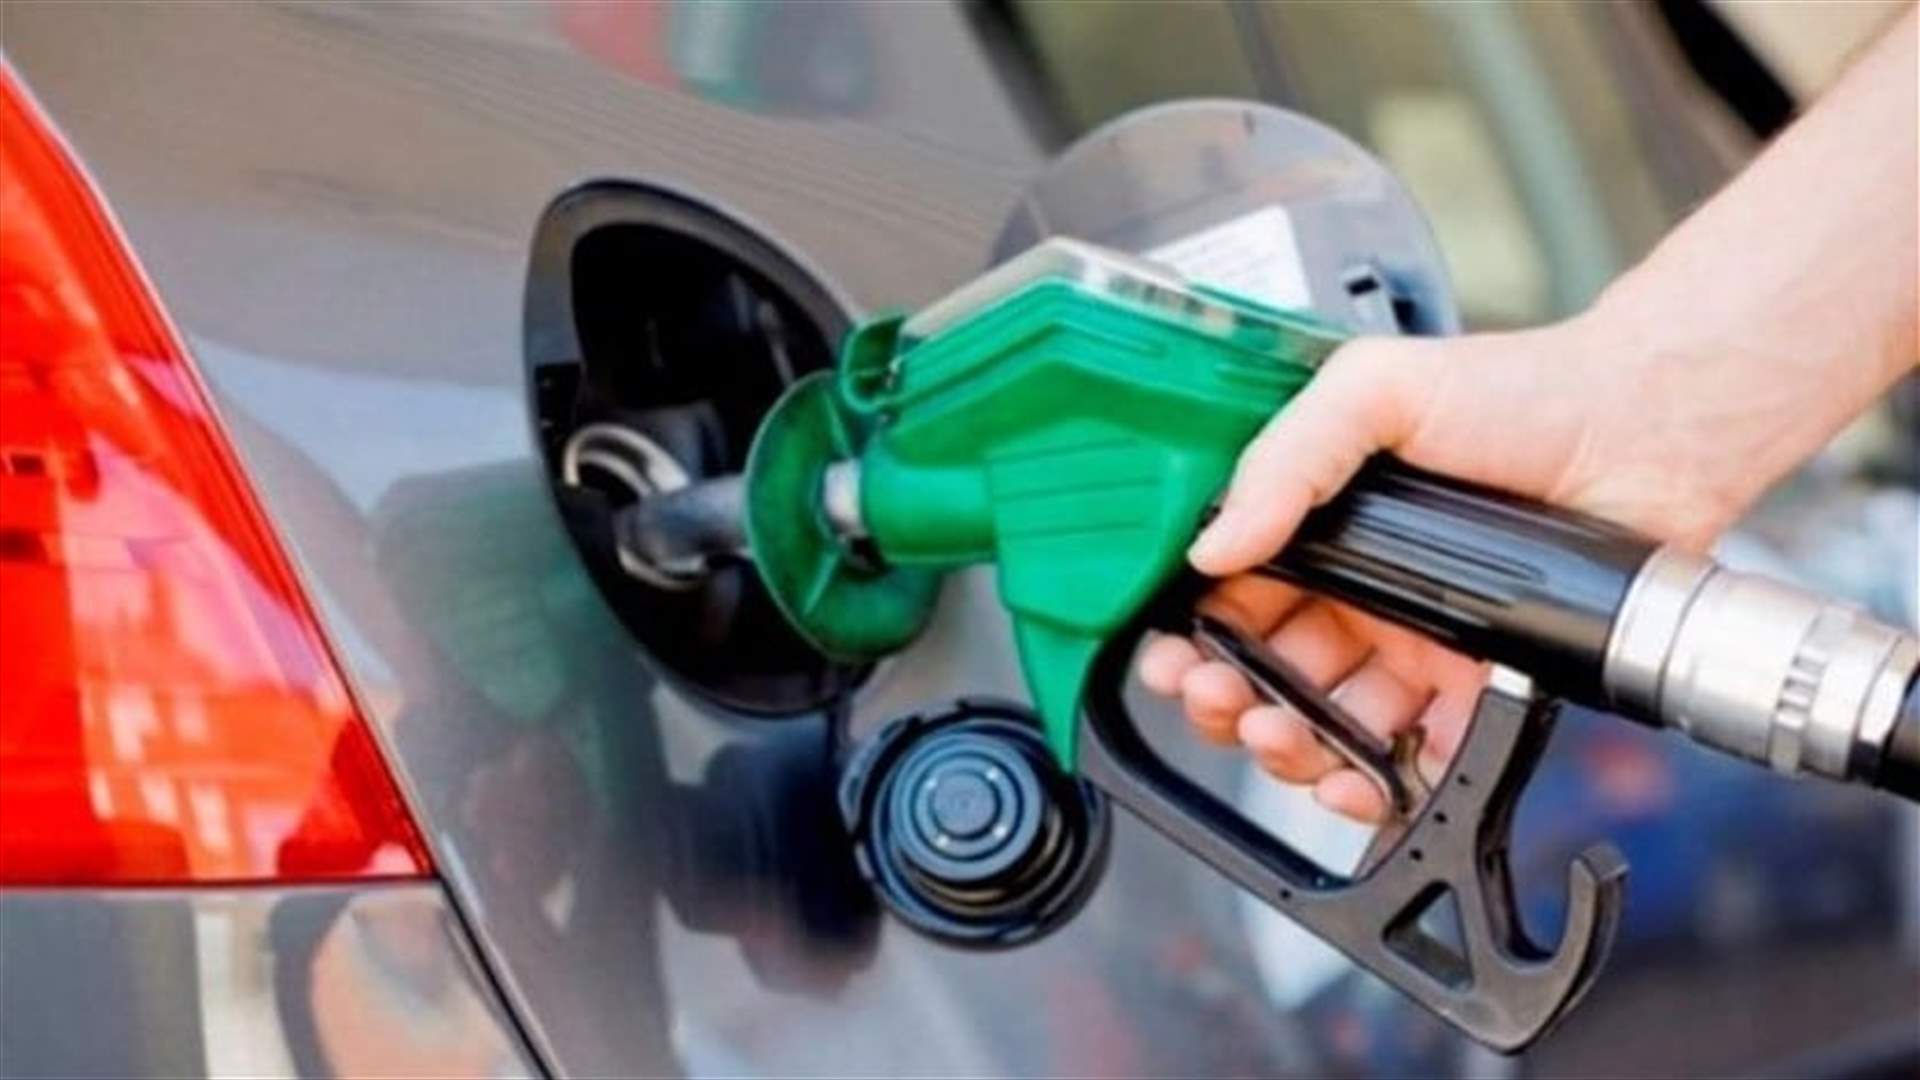 Drop in fuel prices across Lebanon